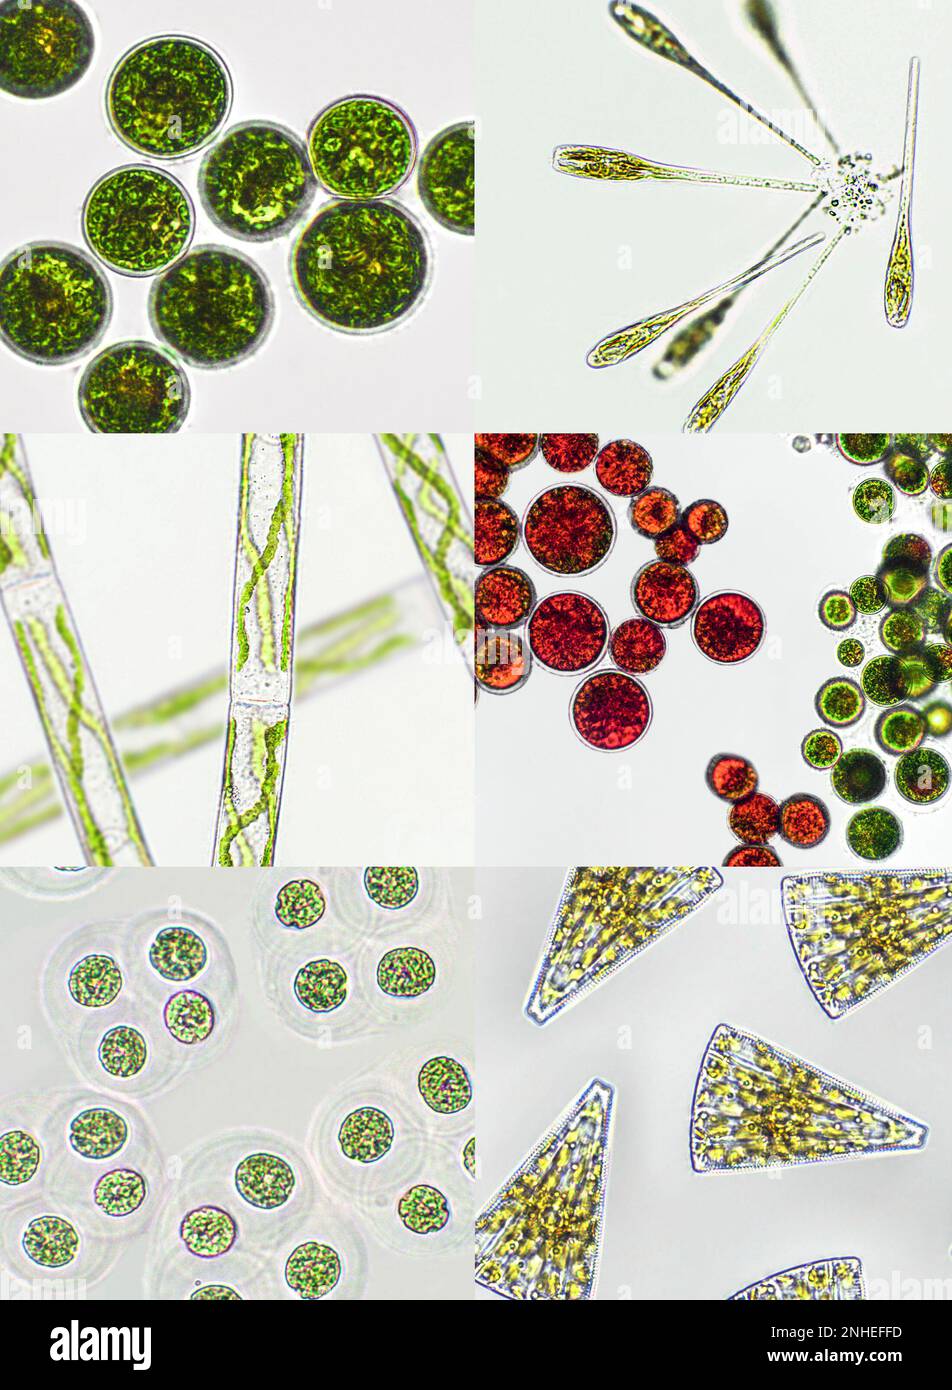 Microalgae under microscopic view, green algae, cyanobacteria, phytoplankton, diatom, algae mix collage background Stock Photo